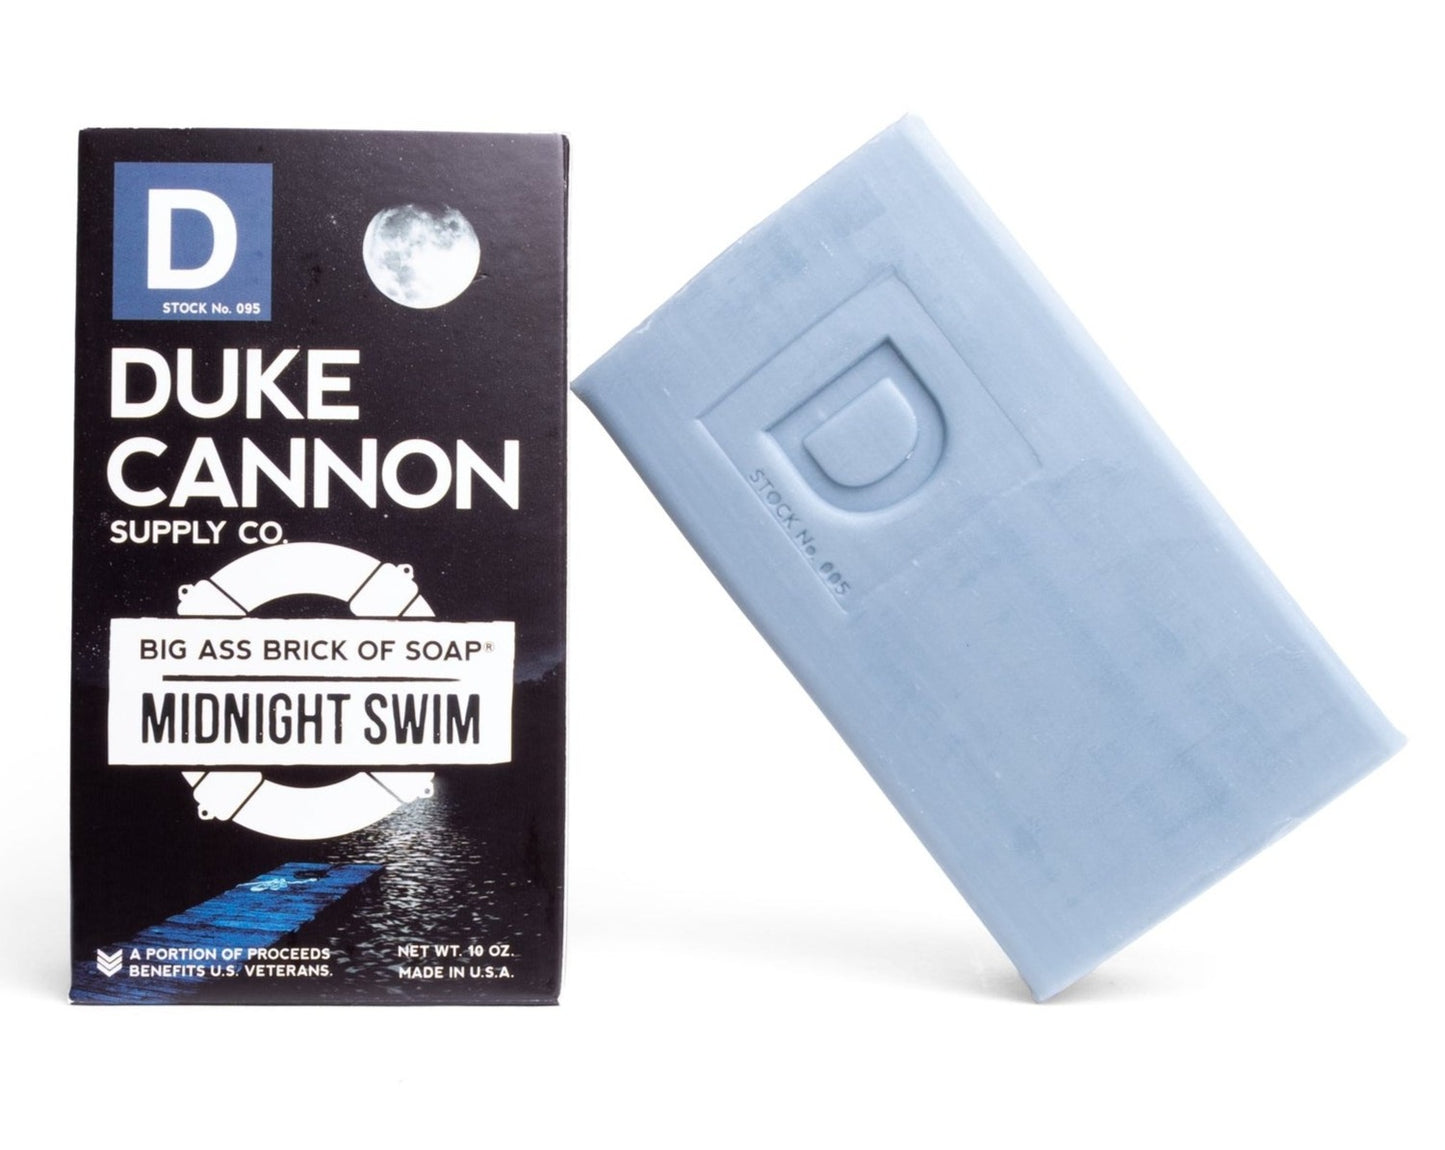 Men's Grooming - Duke Cannon - Big Brick of Soap - Midnight Swim